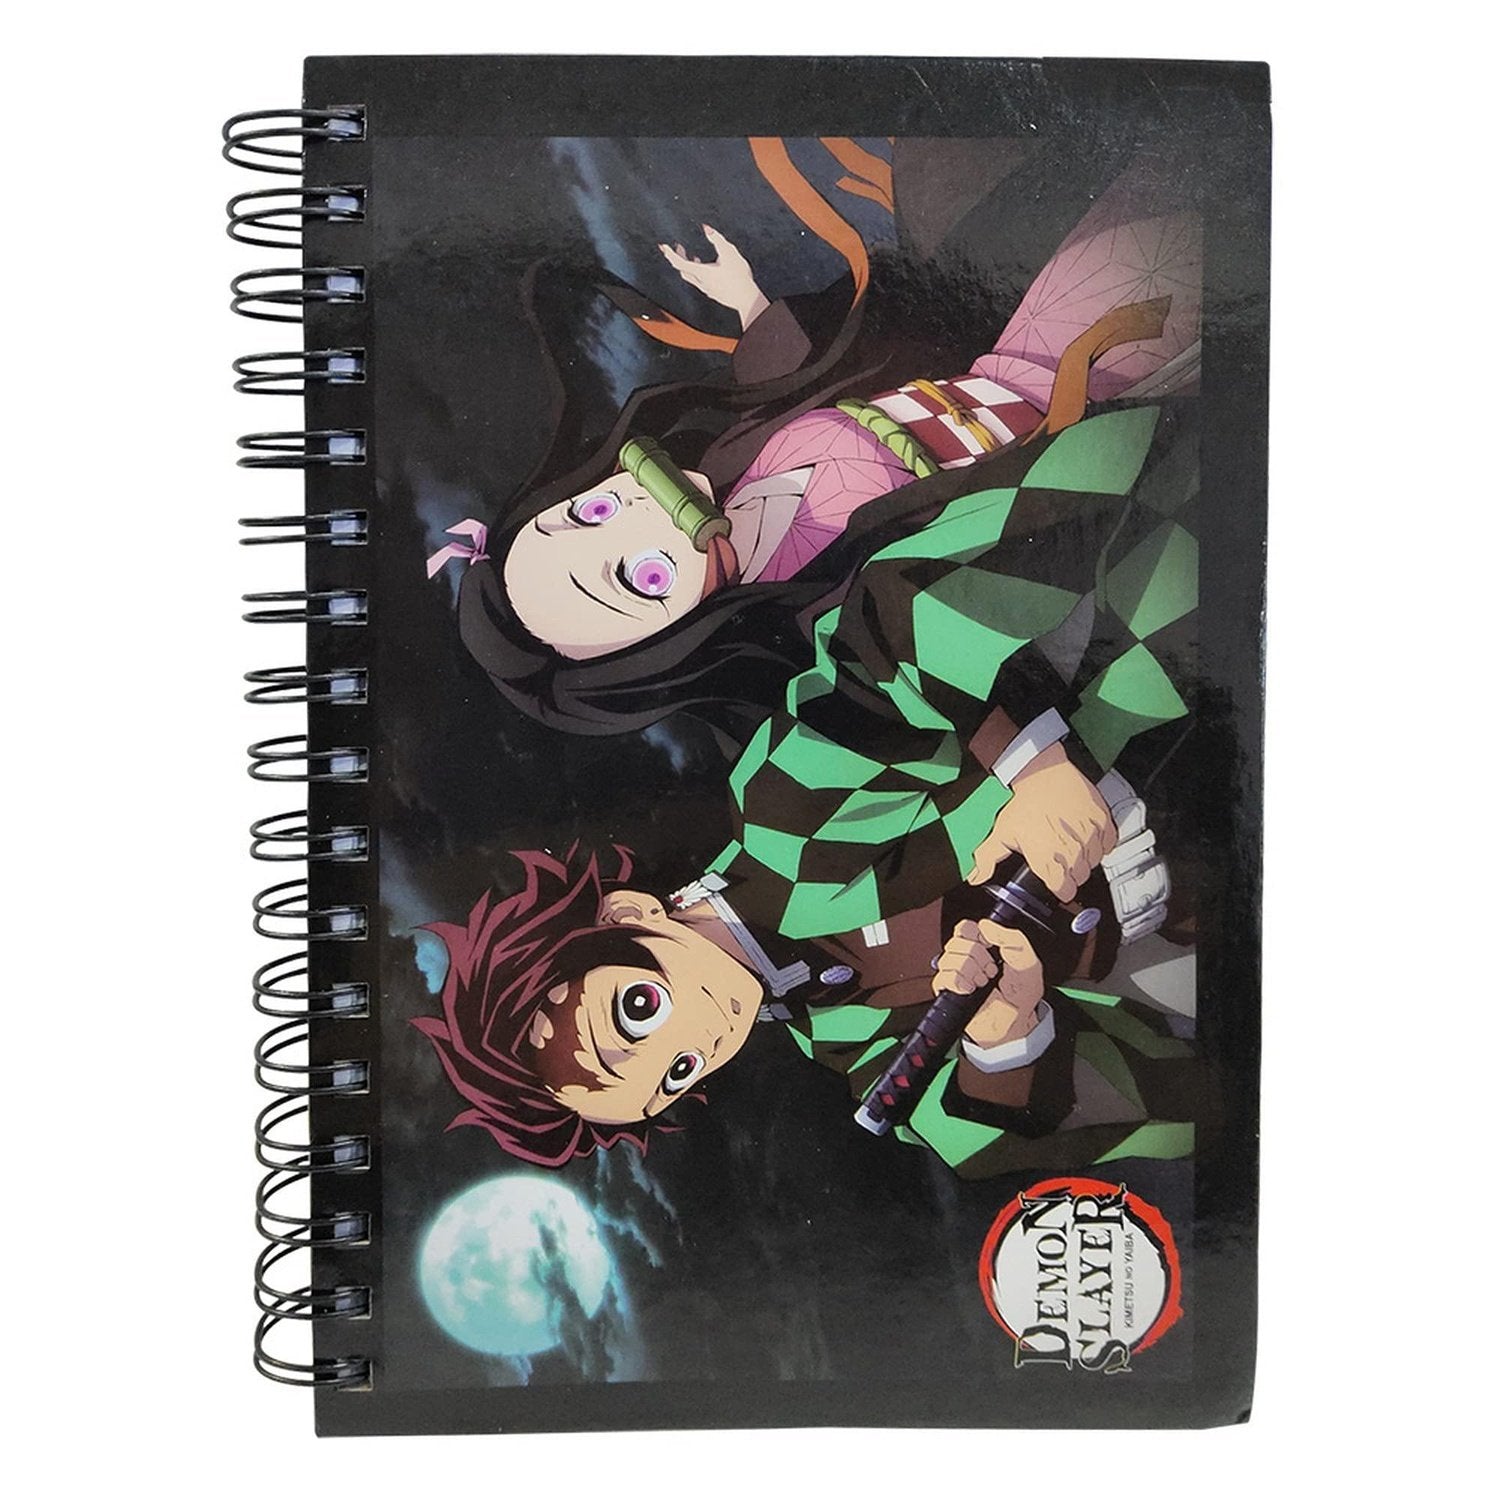 Anime Manga Comic Notebook: Anime Design (2) - Create Your Own Anime Manga  Comic Book, Variety of Comic Templates for Anime Figure Drawing (Paperback)  | Boswell Book Company